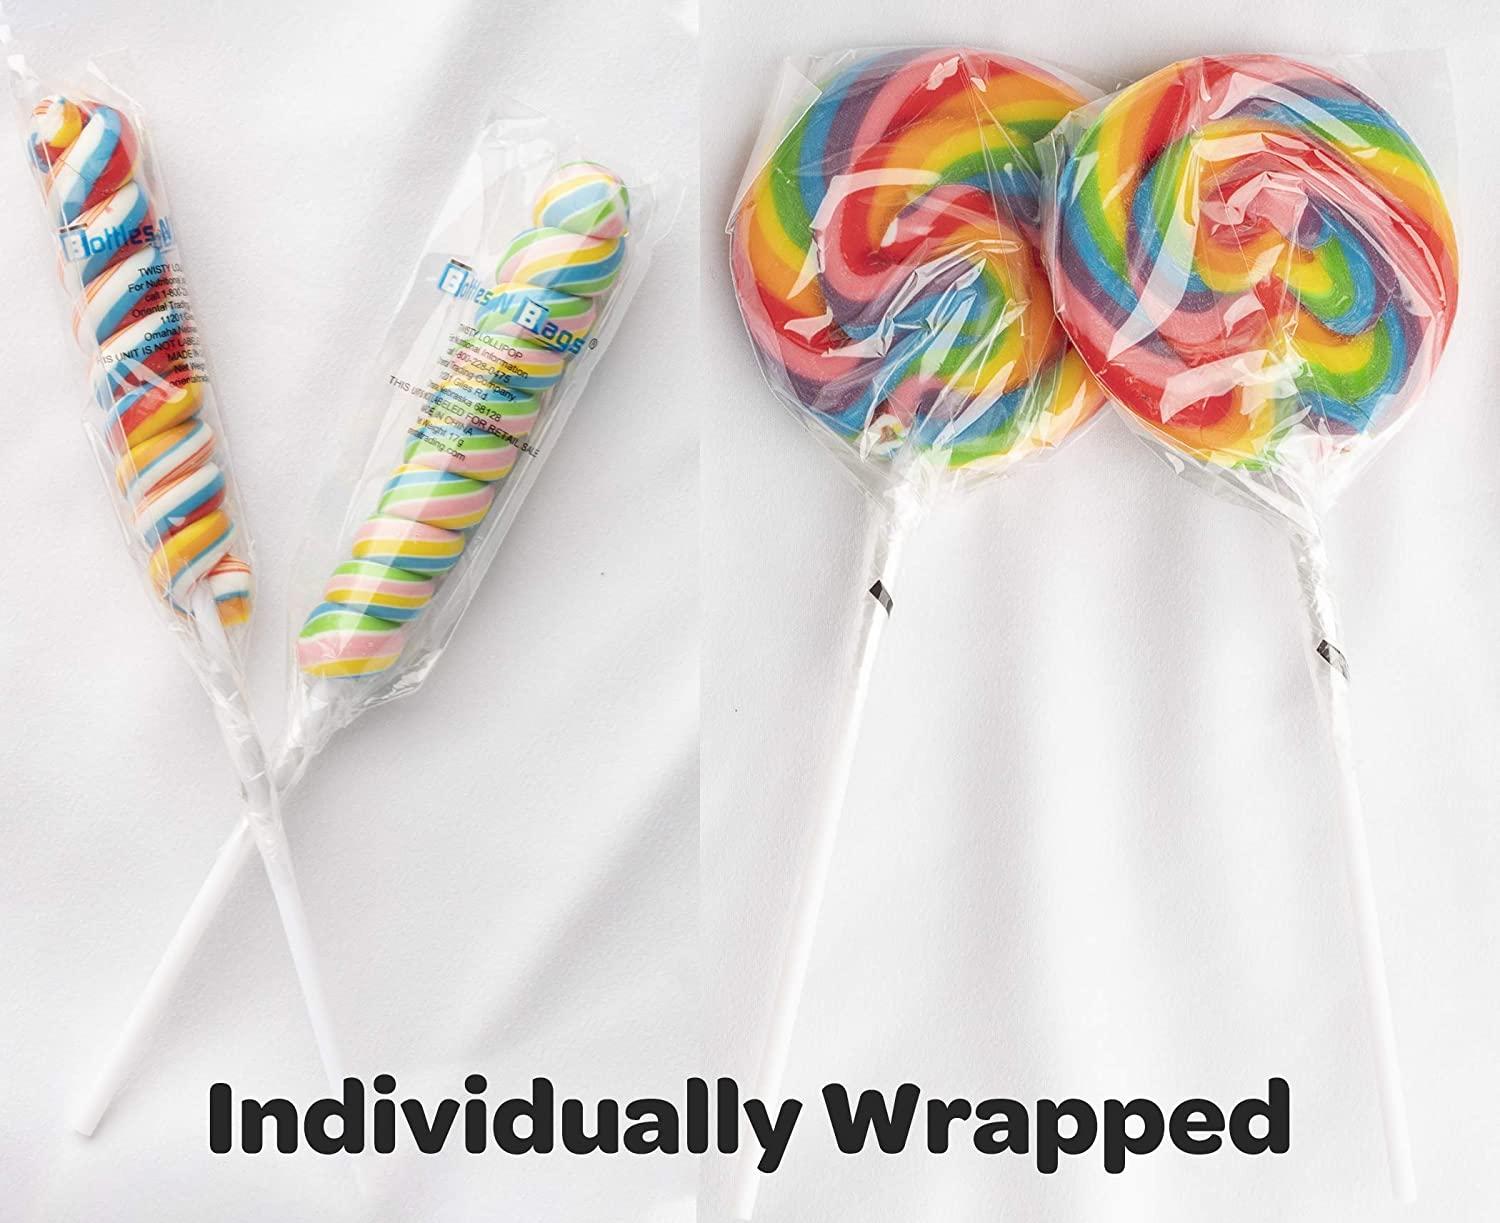 Fun Express Big Rainbow Lollipops For Kids, 6 Count